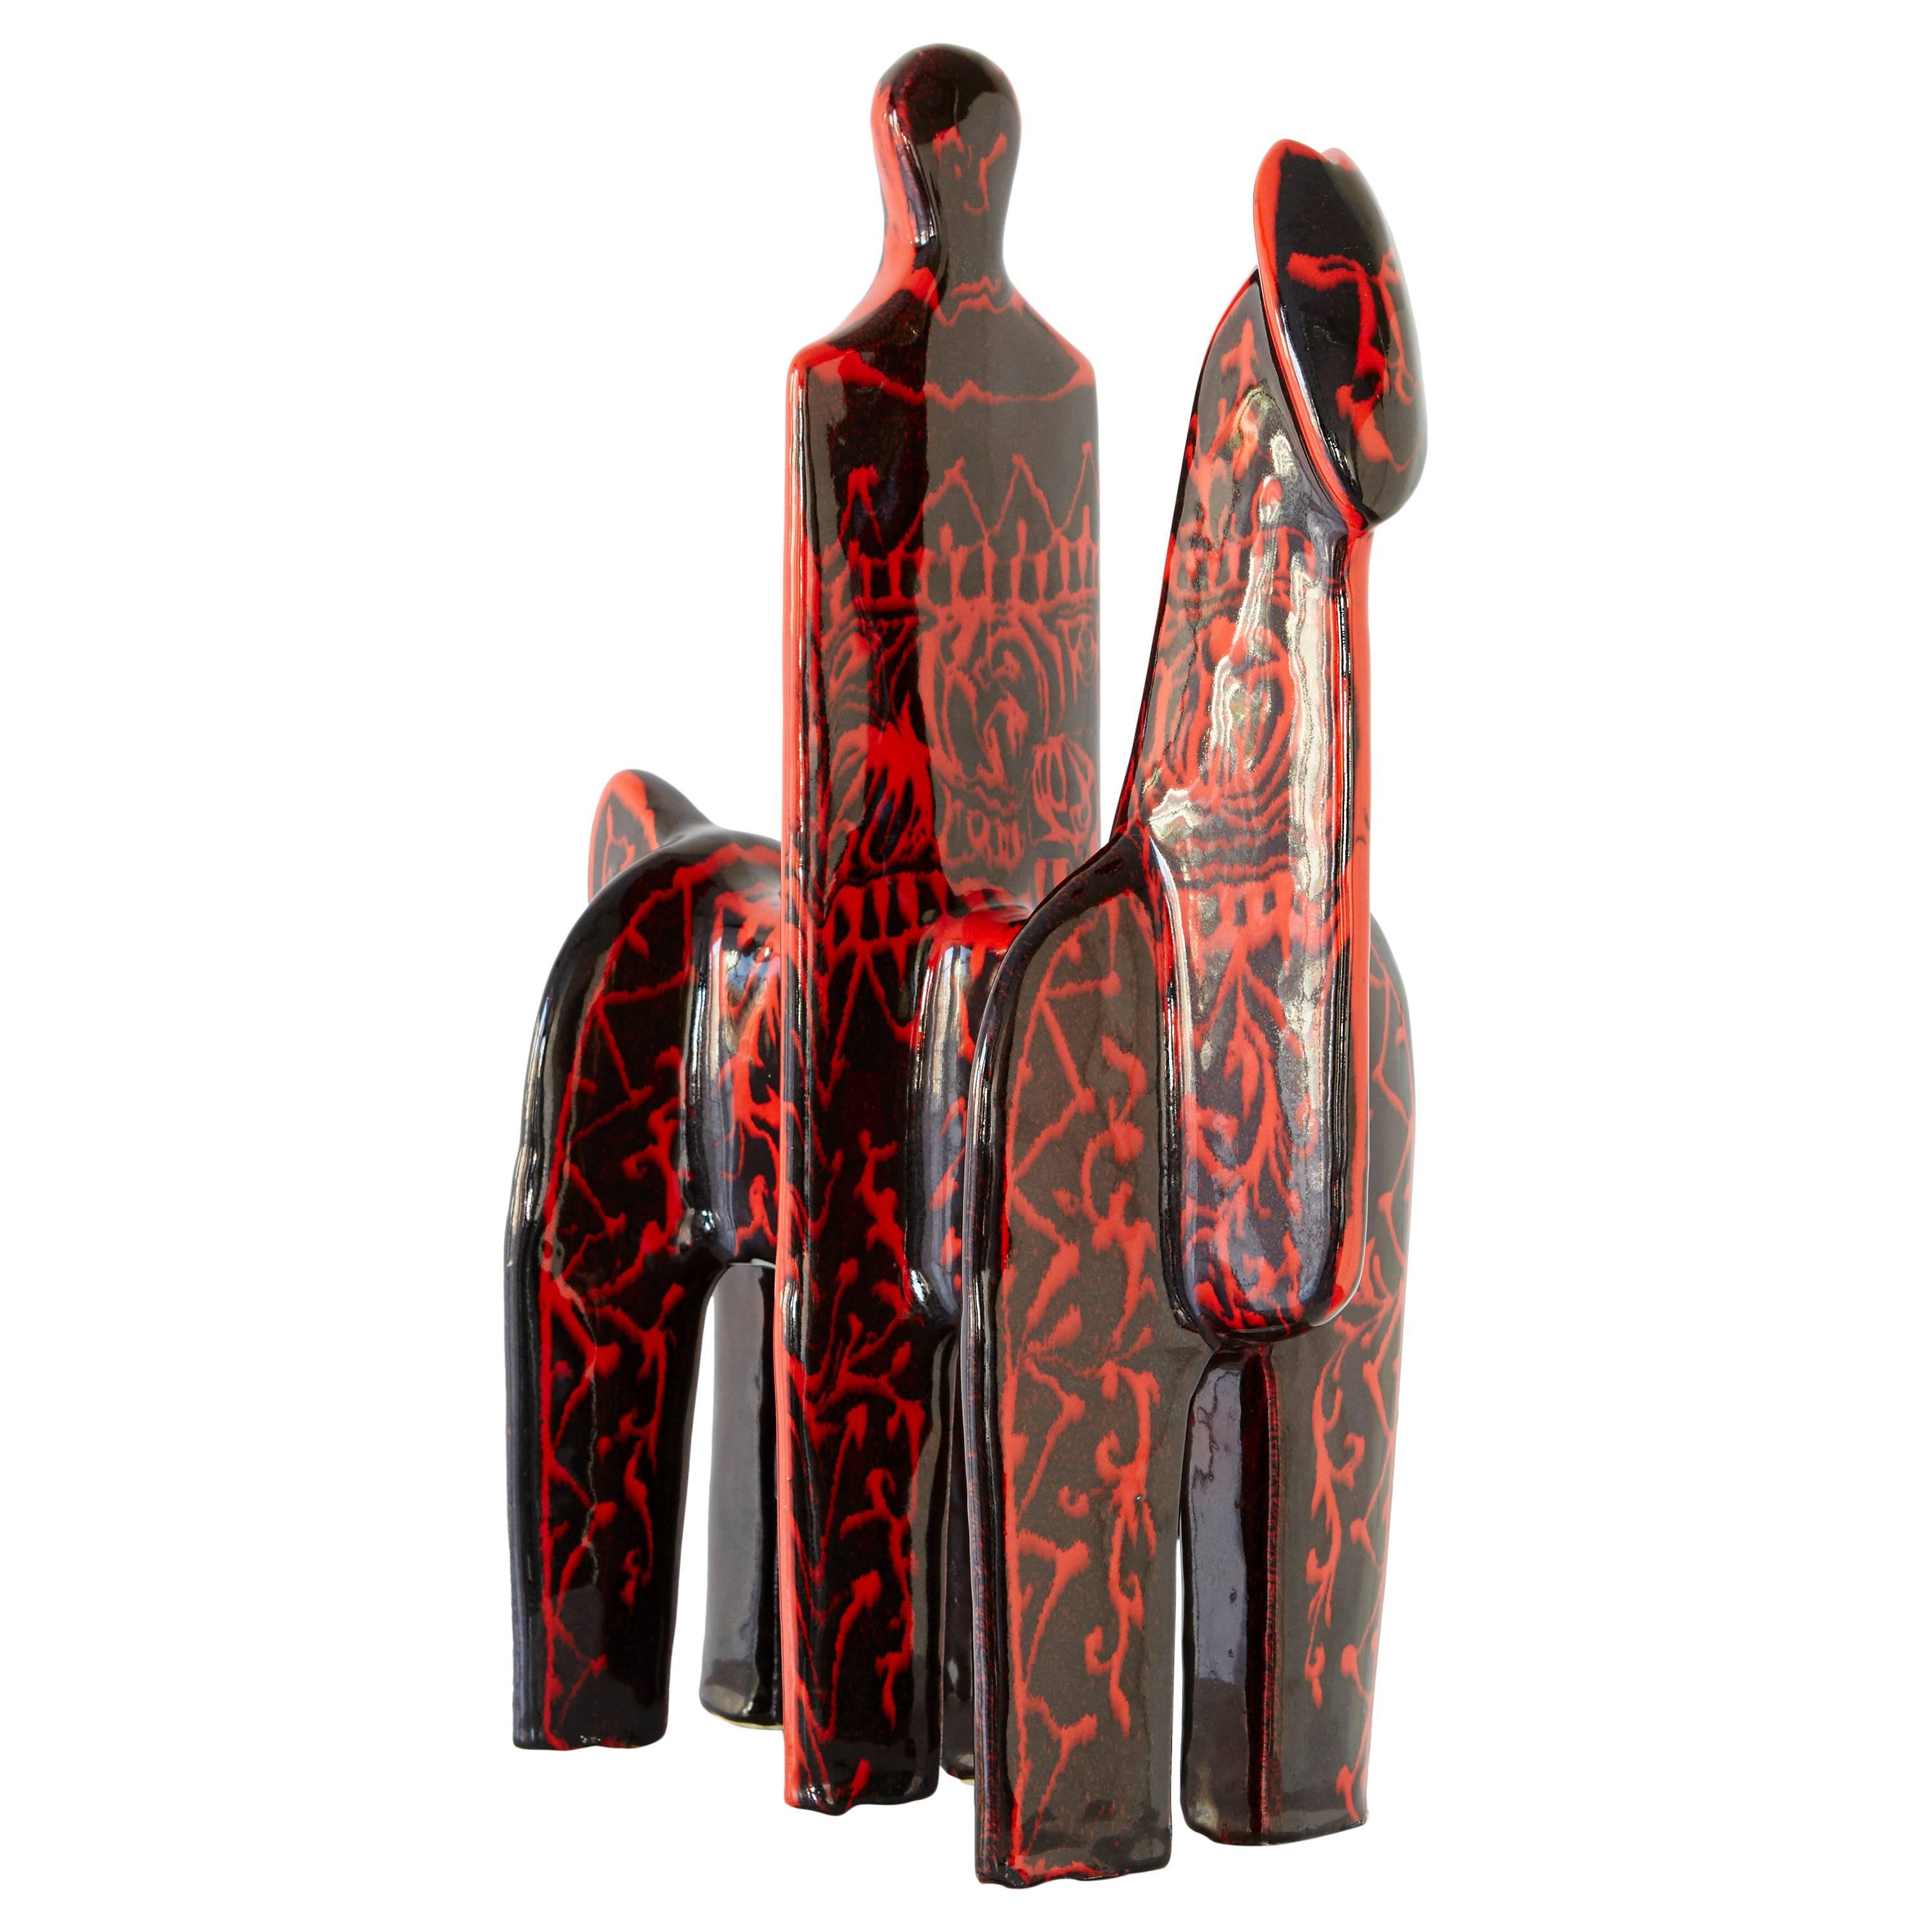 Alvino Bagni Glazed Ceramic Sculpture for Raymor